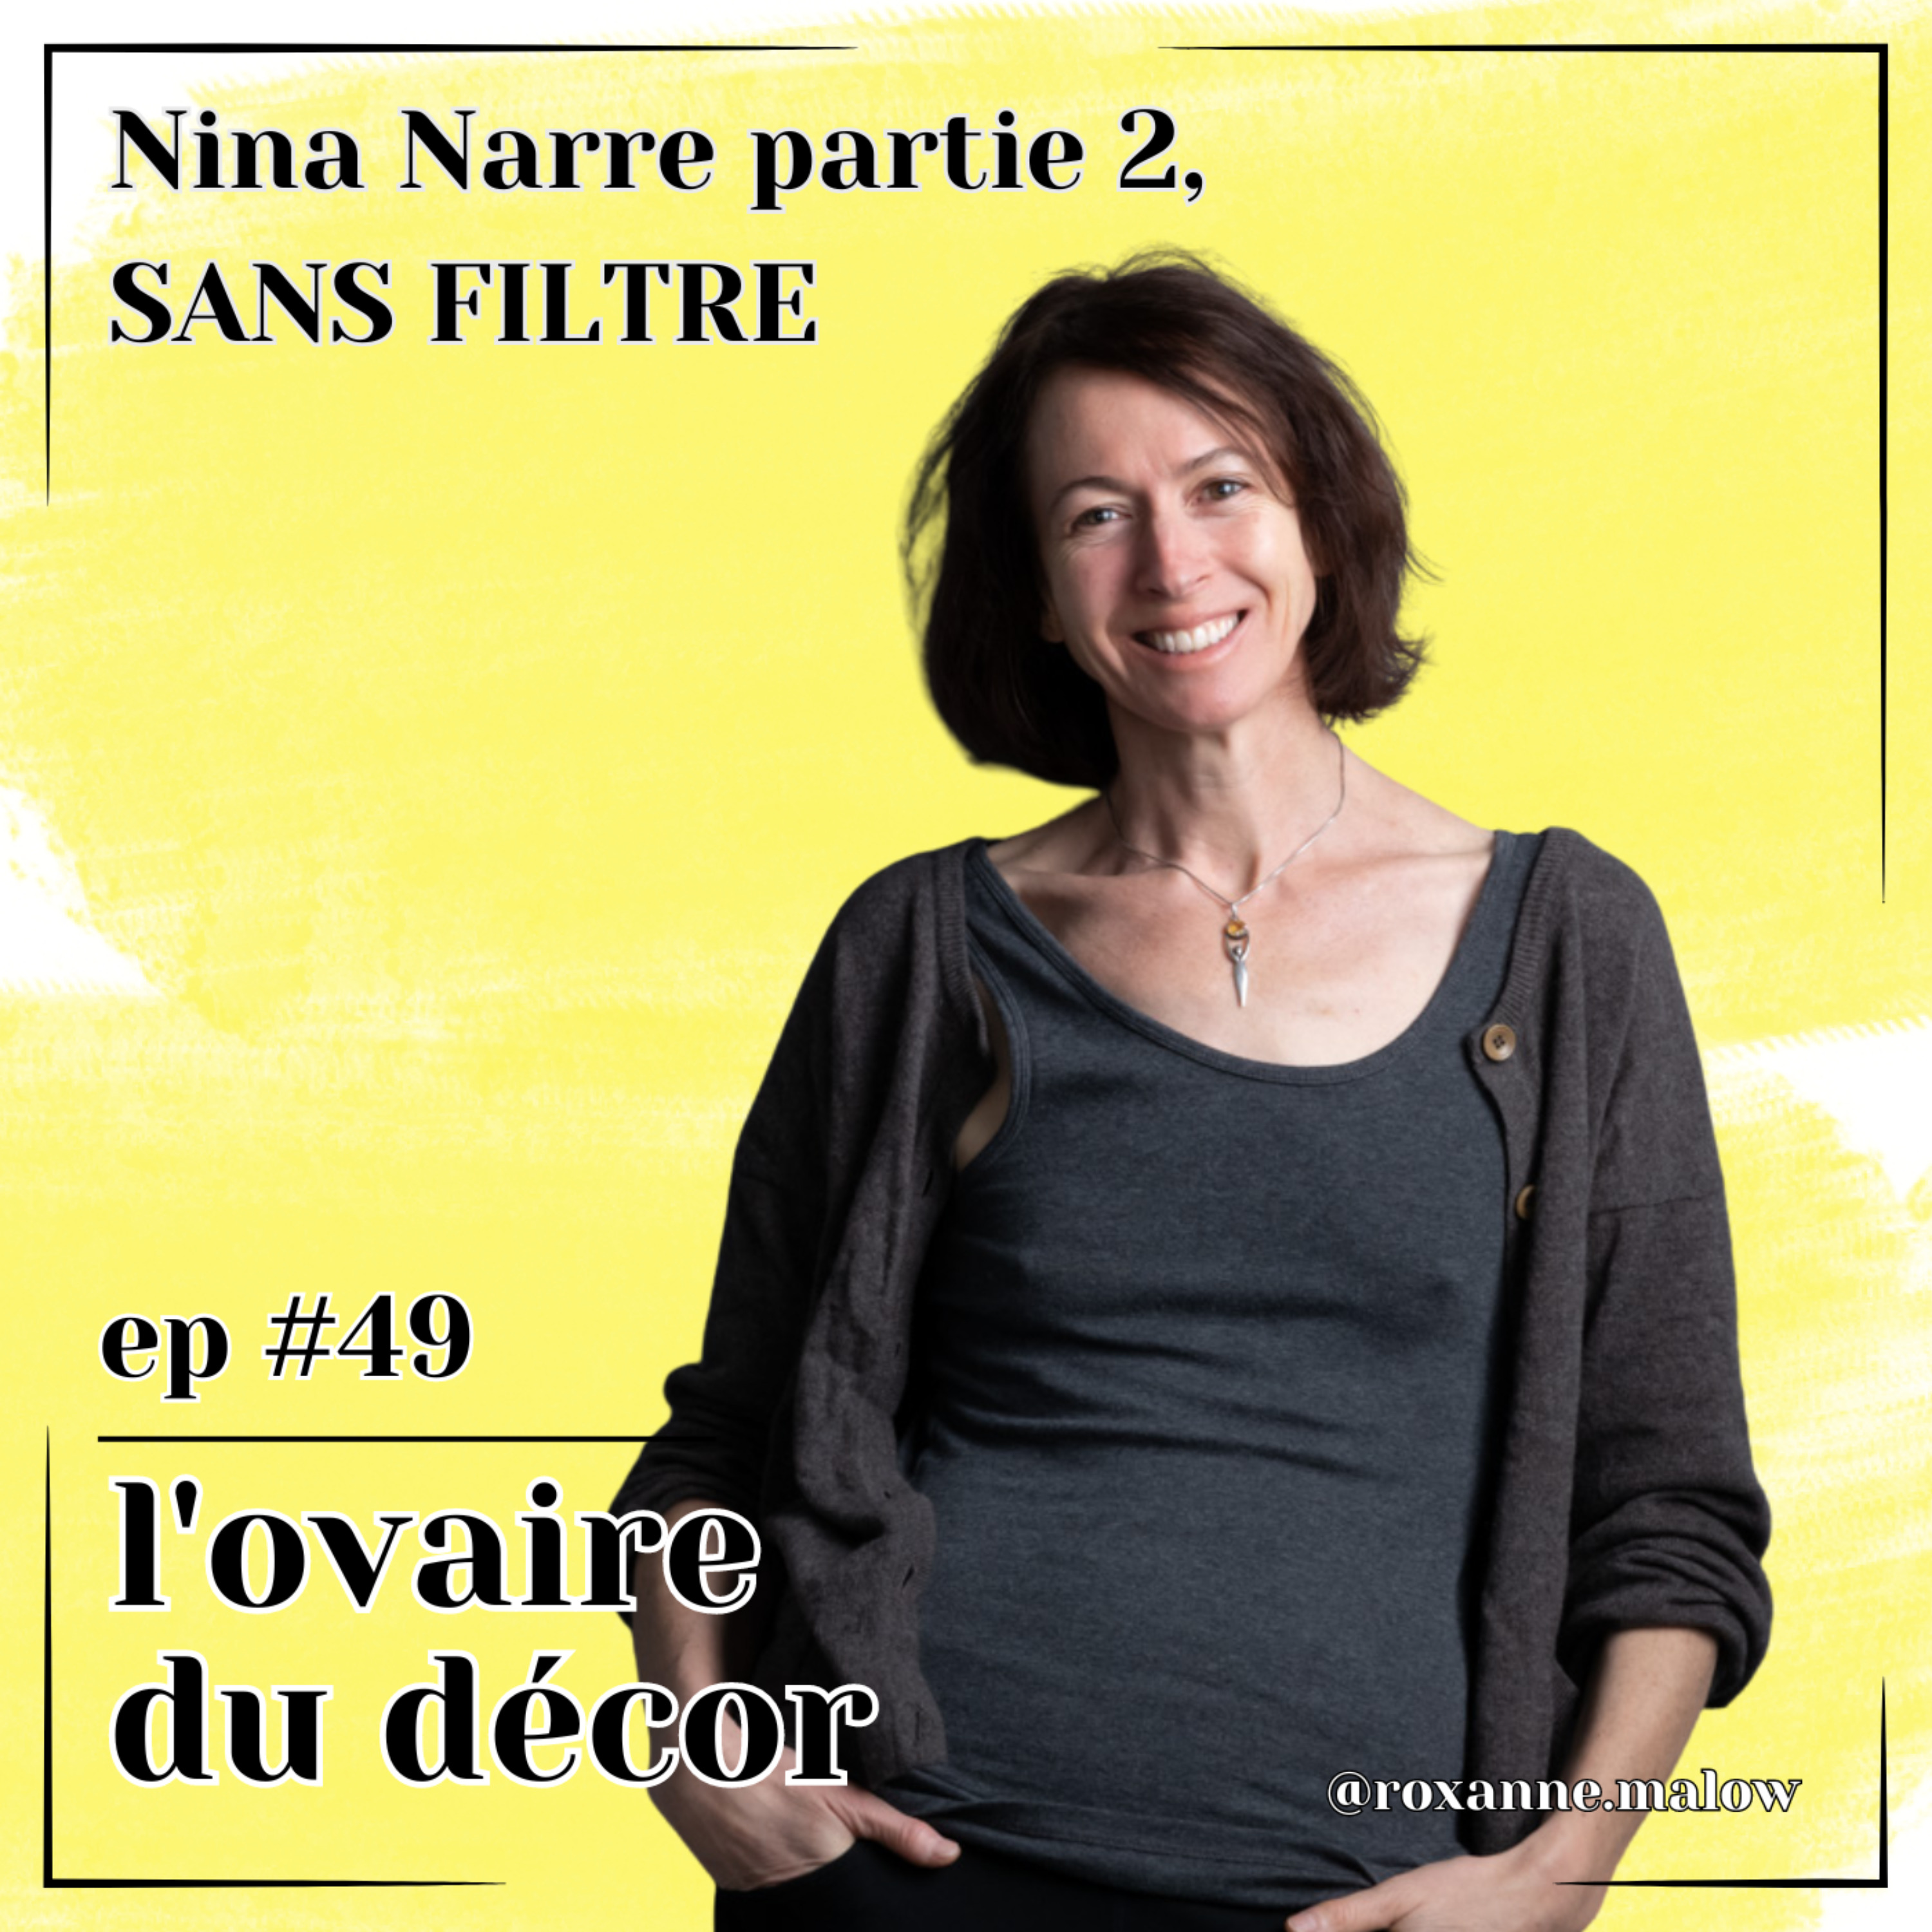 cover art for Ep #50 Nina Narre, 2e partie SANS FILTRE